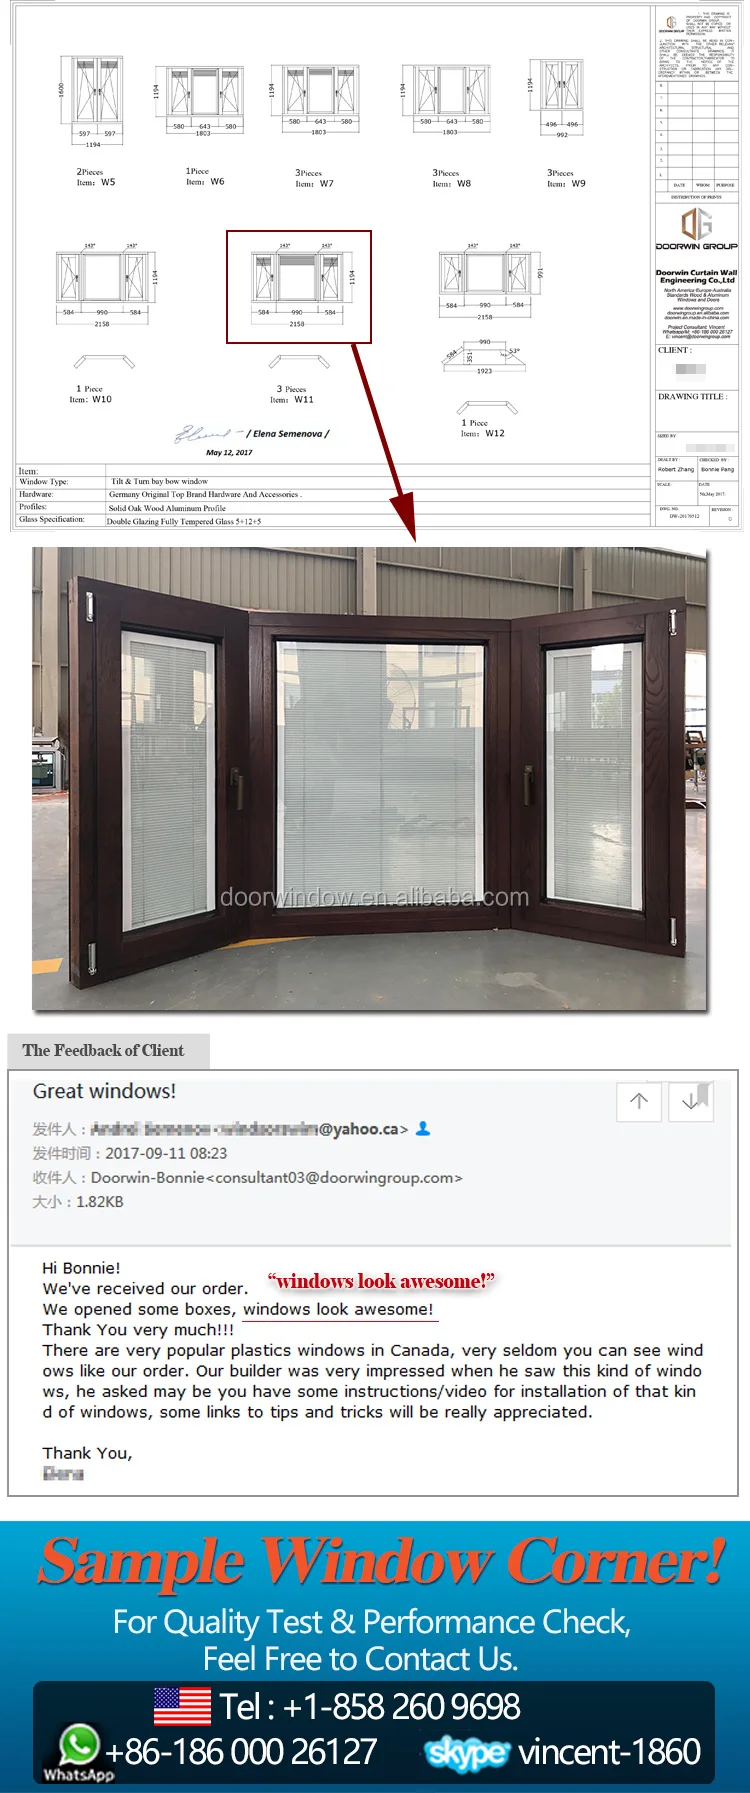 Sun louver steel Brown wood design aluminium tilt turn window with manual bilnd casement window philippines shutters